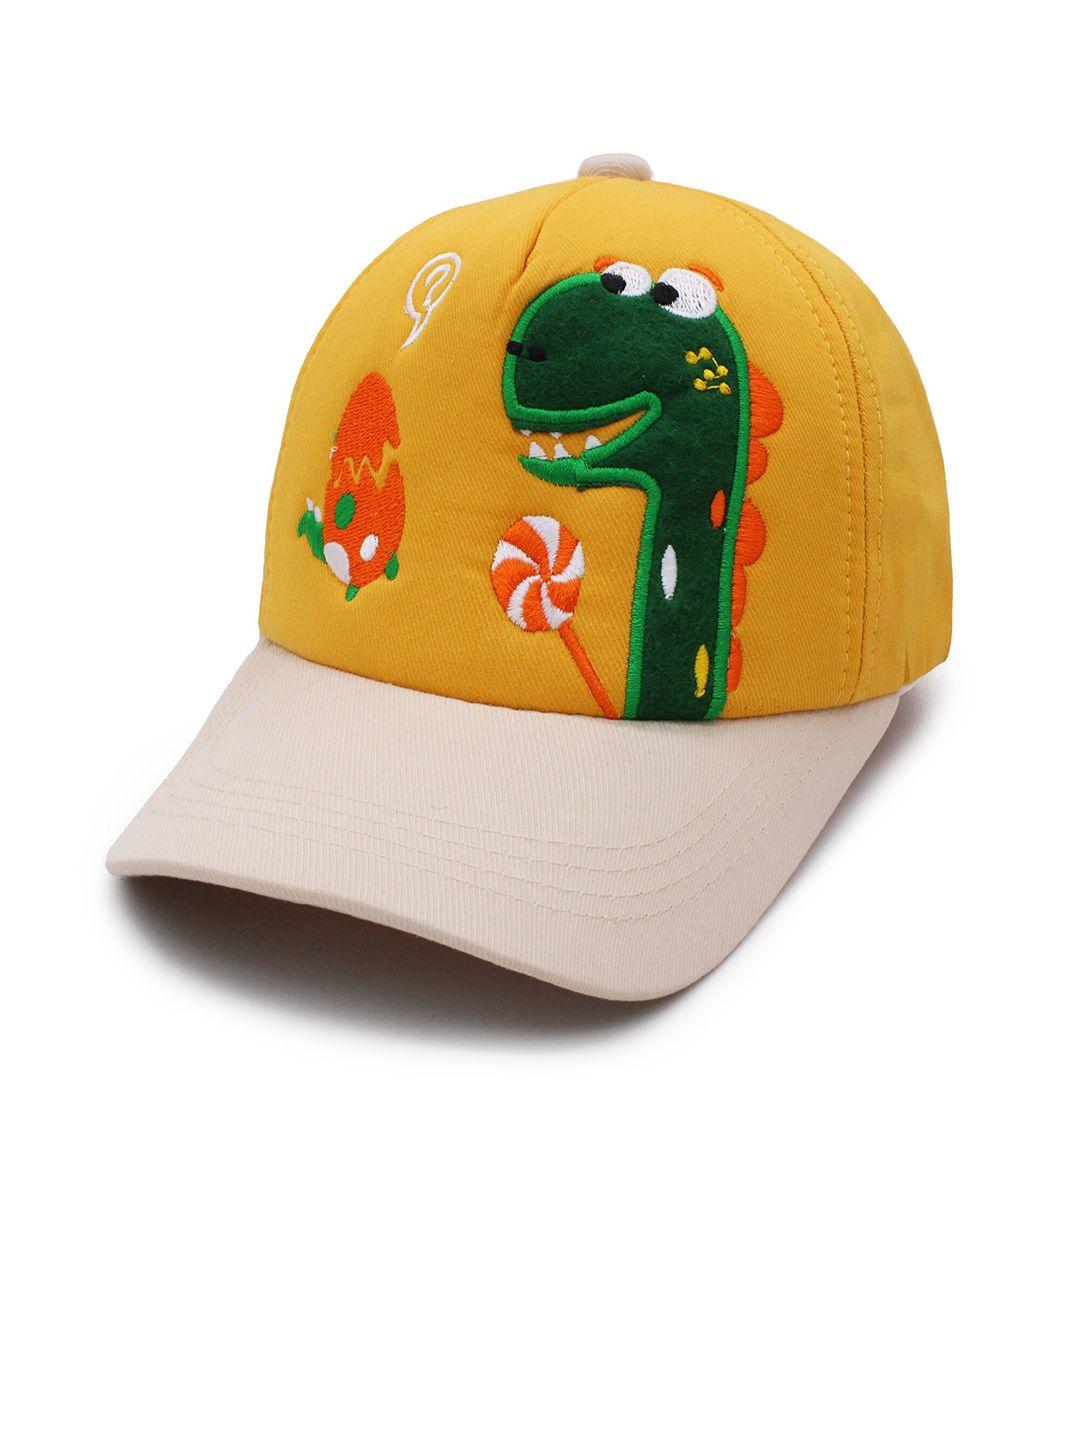 jenna kids embroidered baseball cap